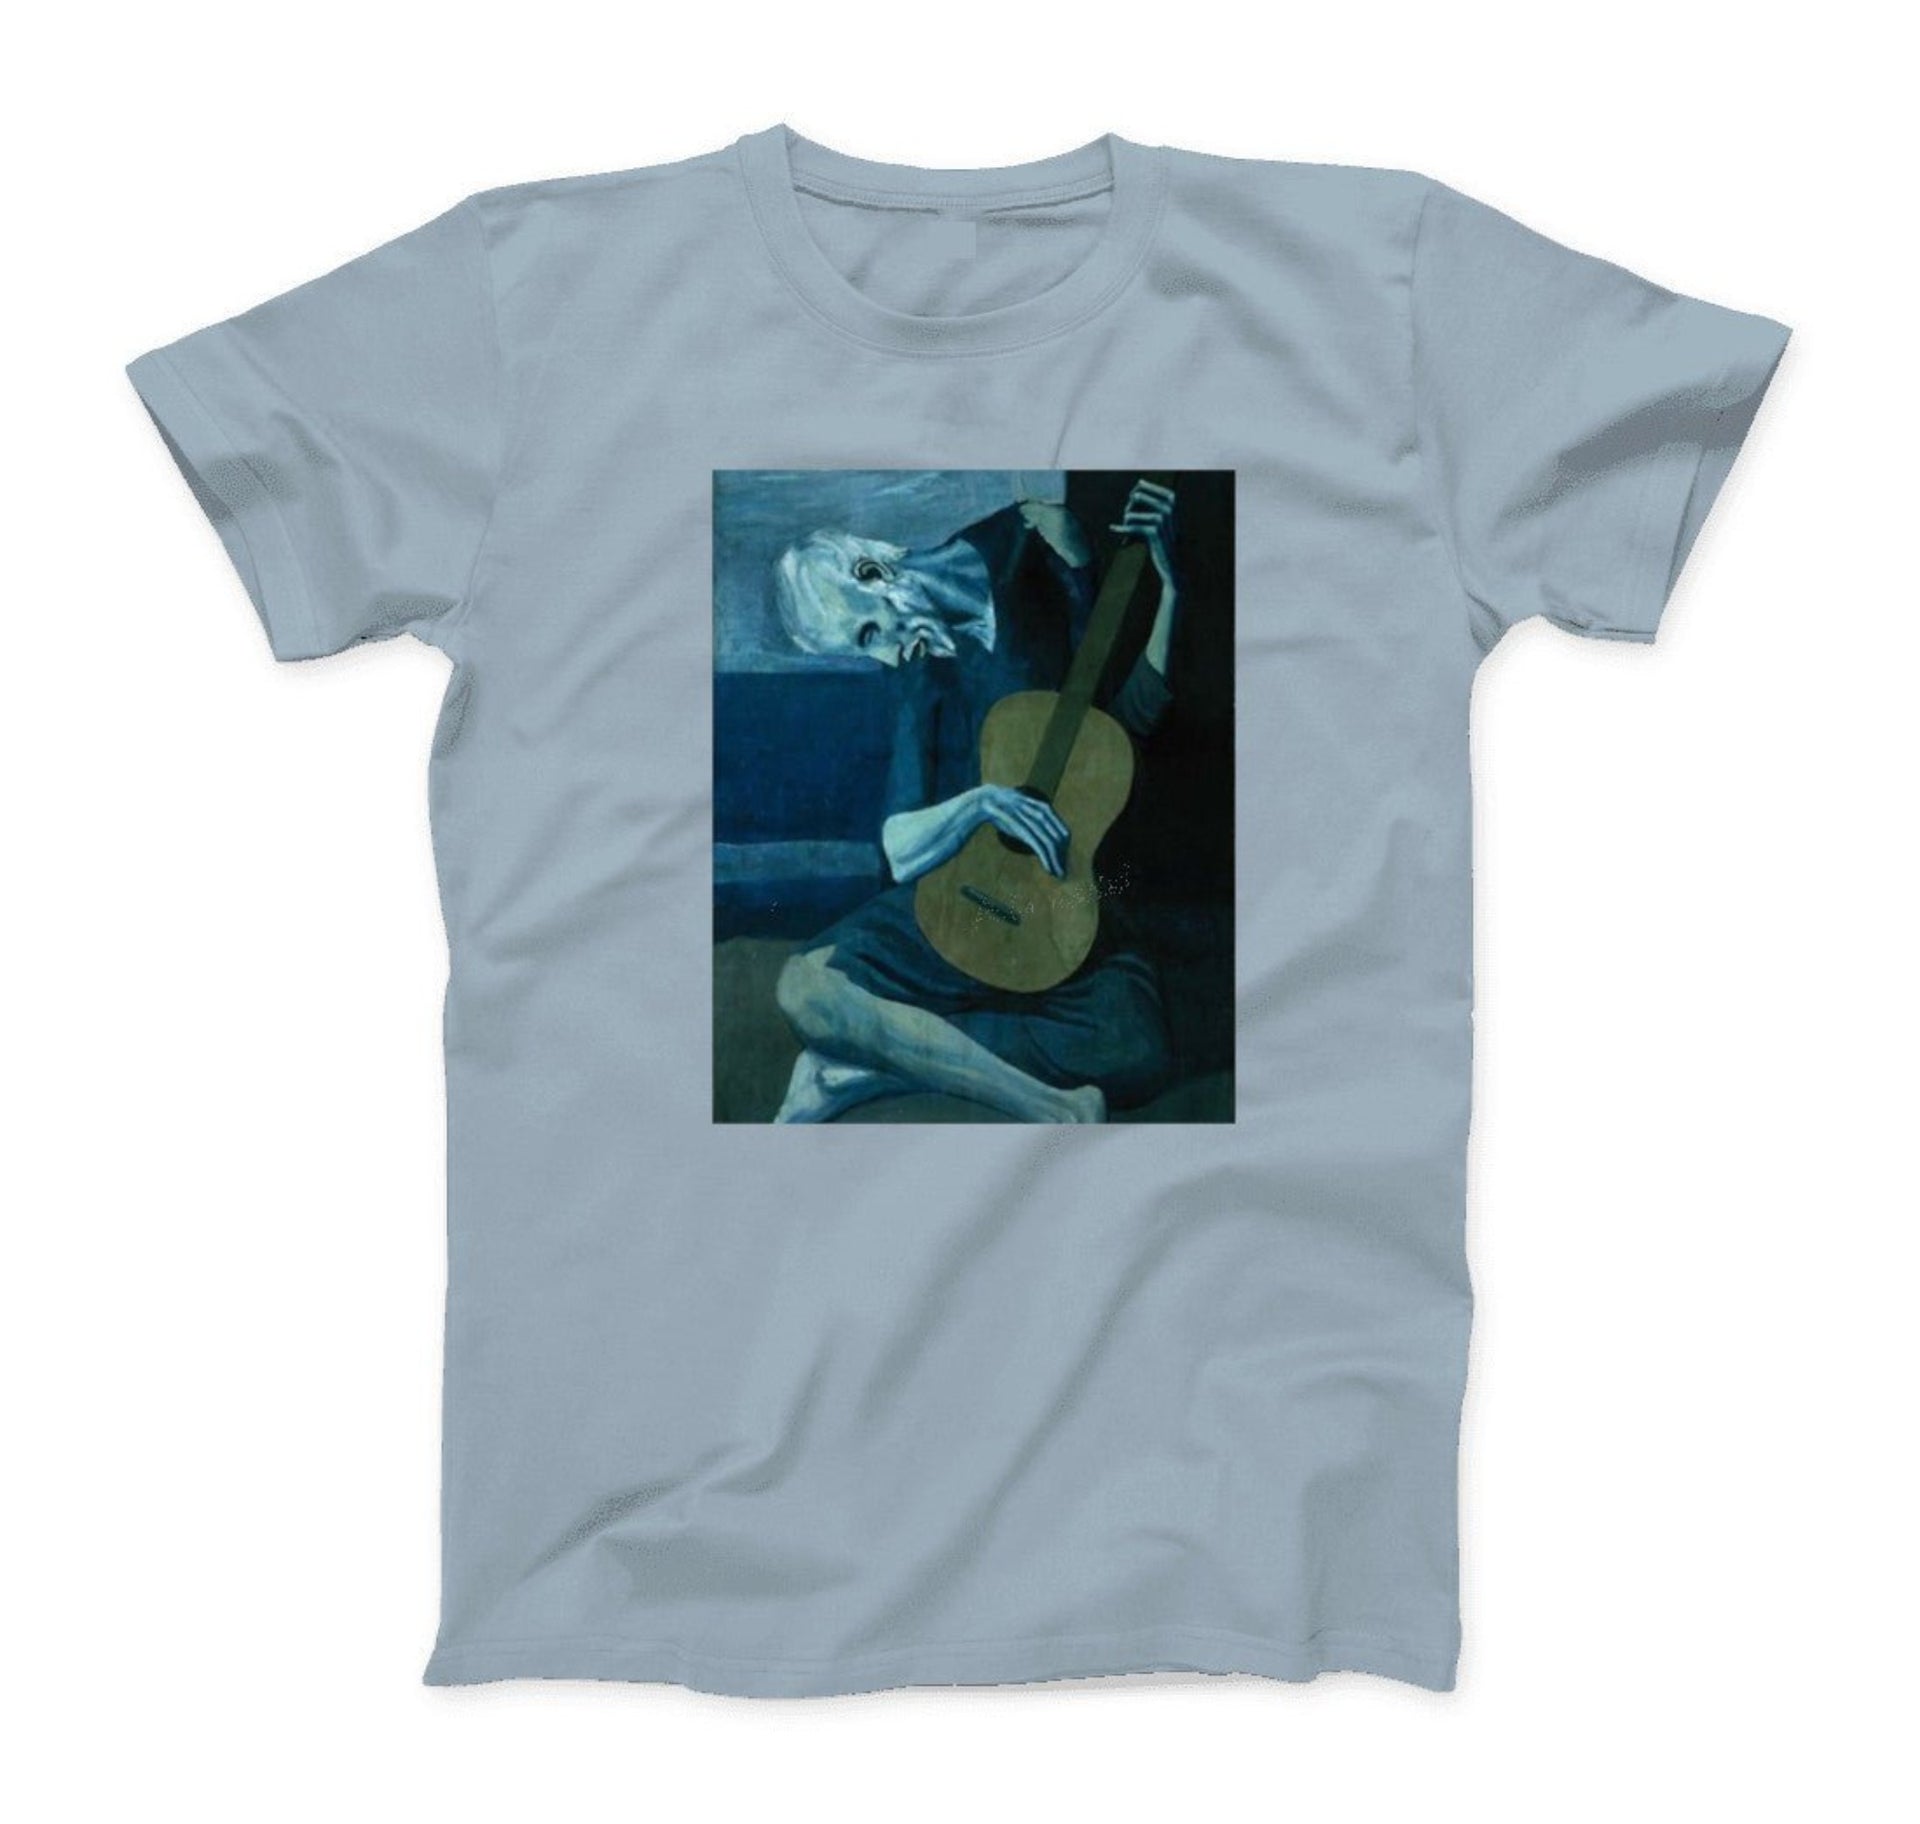 Pablo Picasso The Old Guitarist 1903 Artwork T-shirt - Clothing - Harvey Ltd